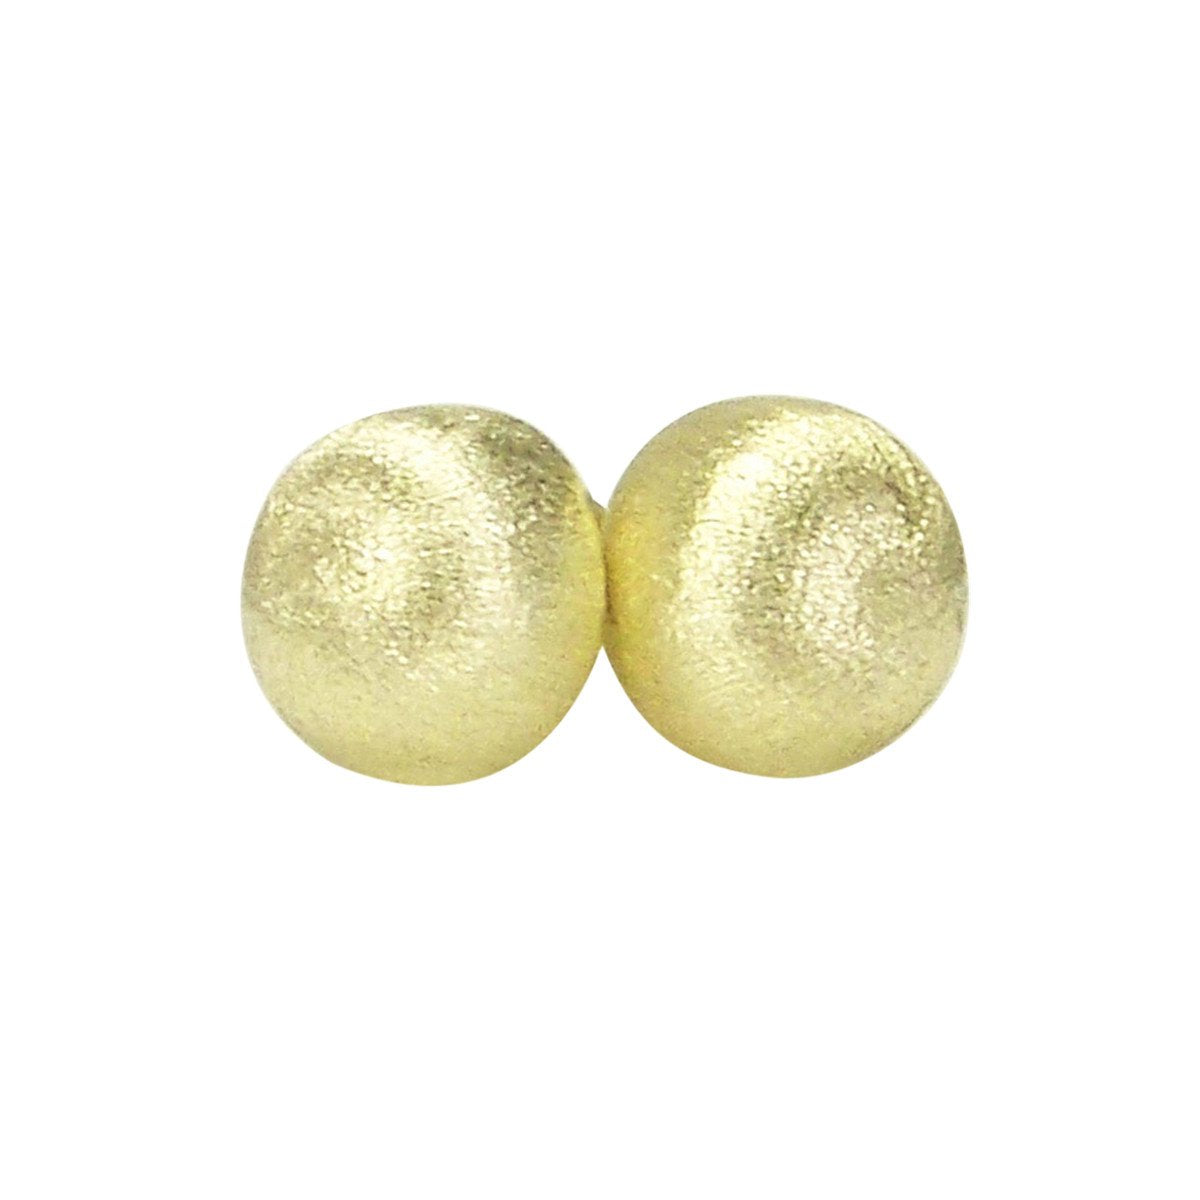 Pair of Sheila Fajl Lilou Ball Stud Earrings in Gold